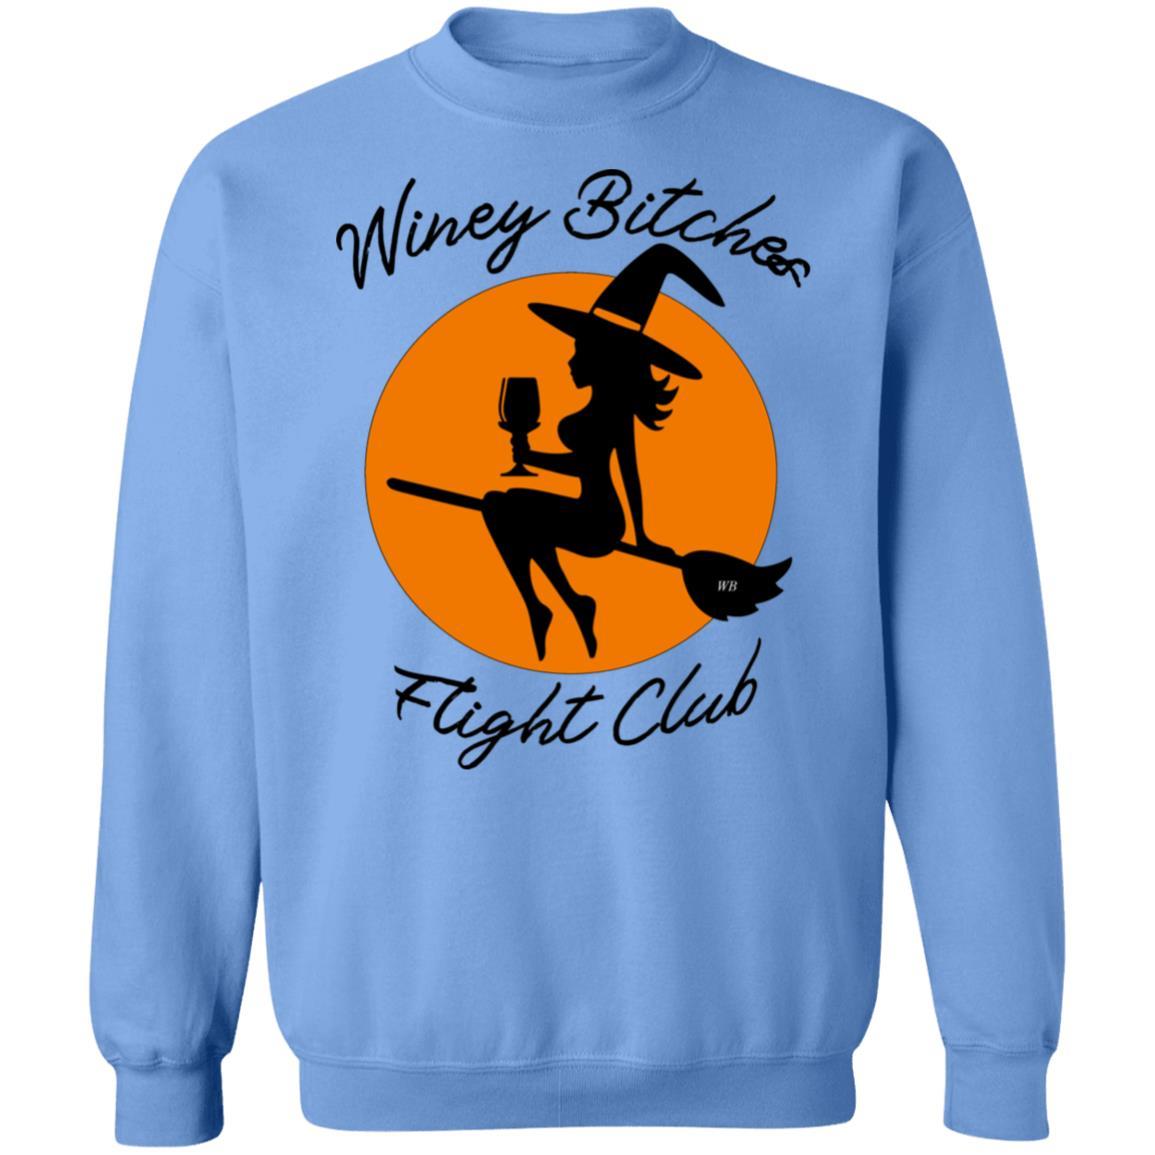 Sweatshirts Carolina Blue / S WineyBitches.Co "Winey Bitches Flight Club"Crewneck Pullover Sweatshirt  8 oz. WineyBitchesCo